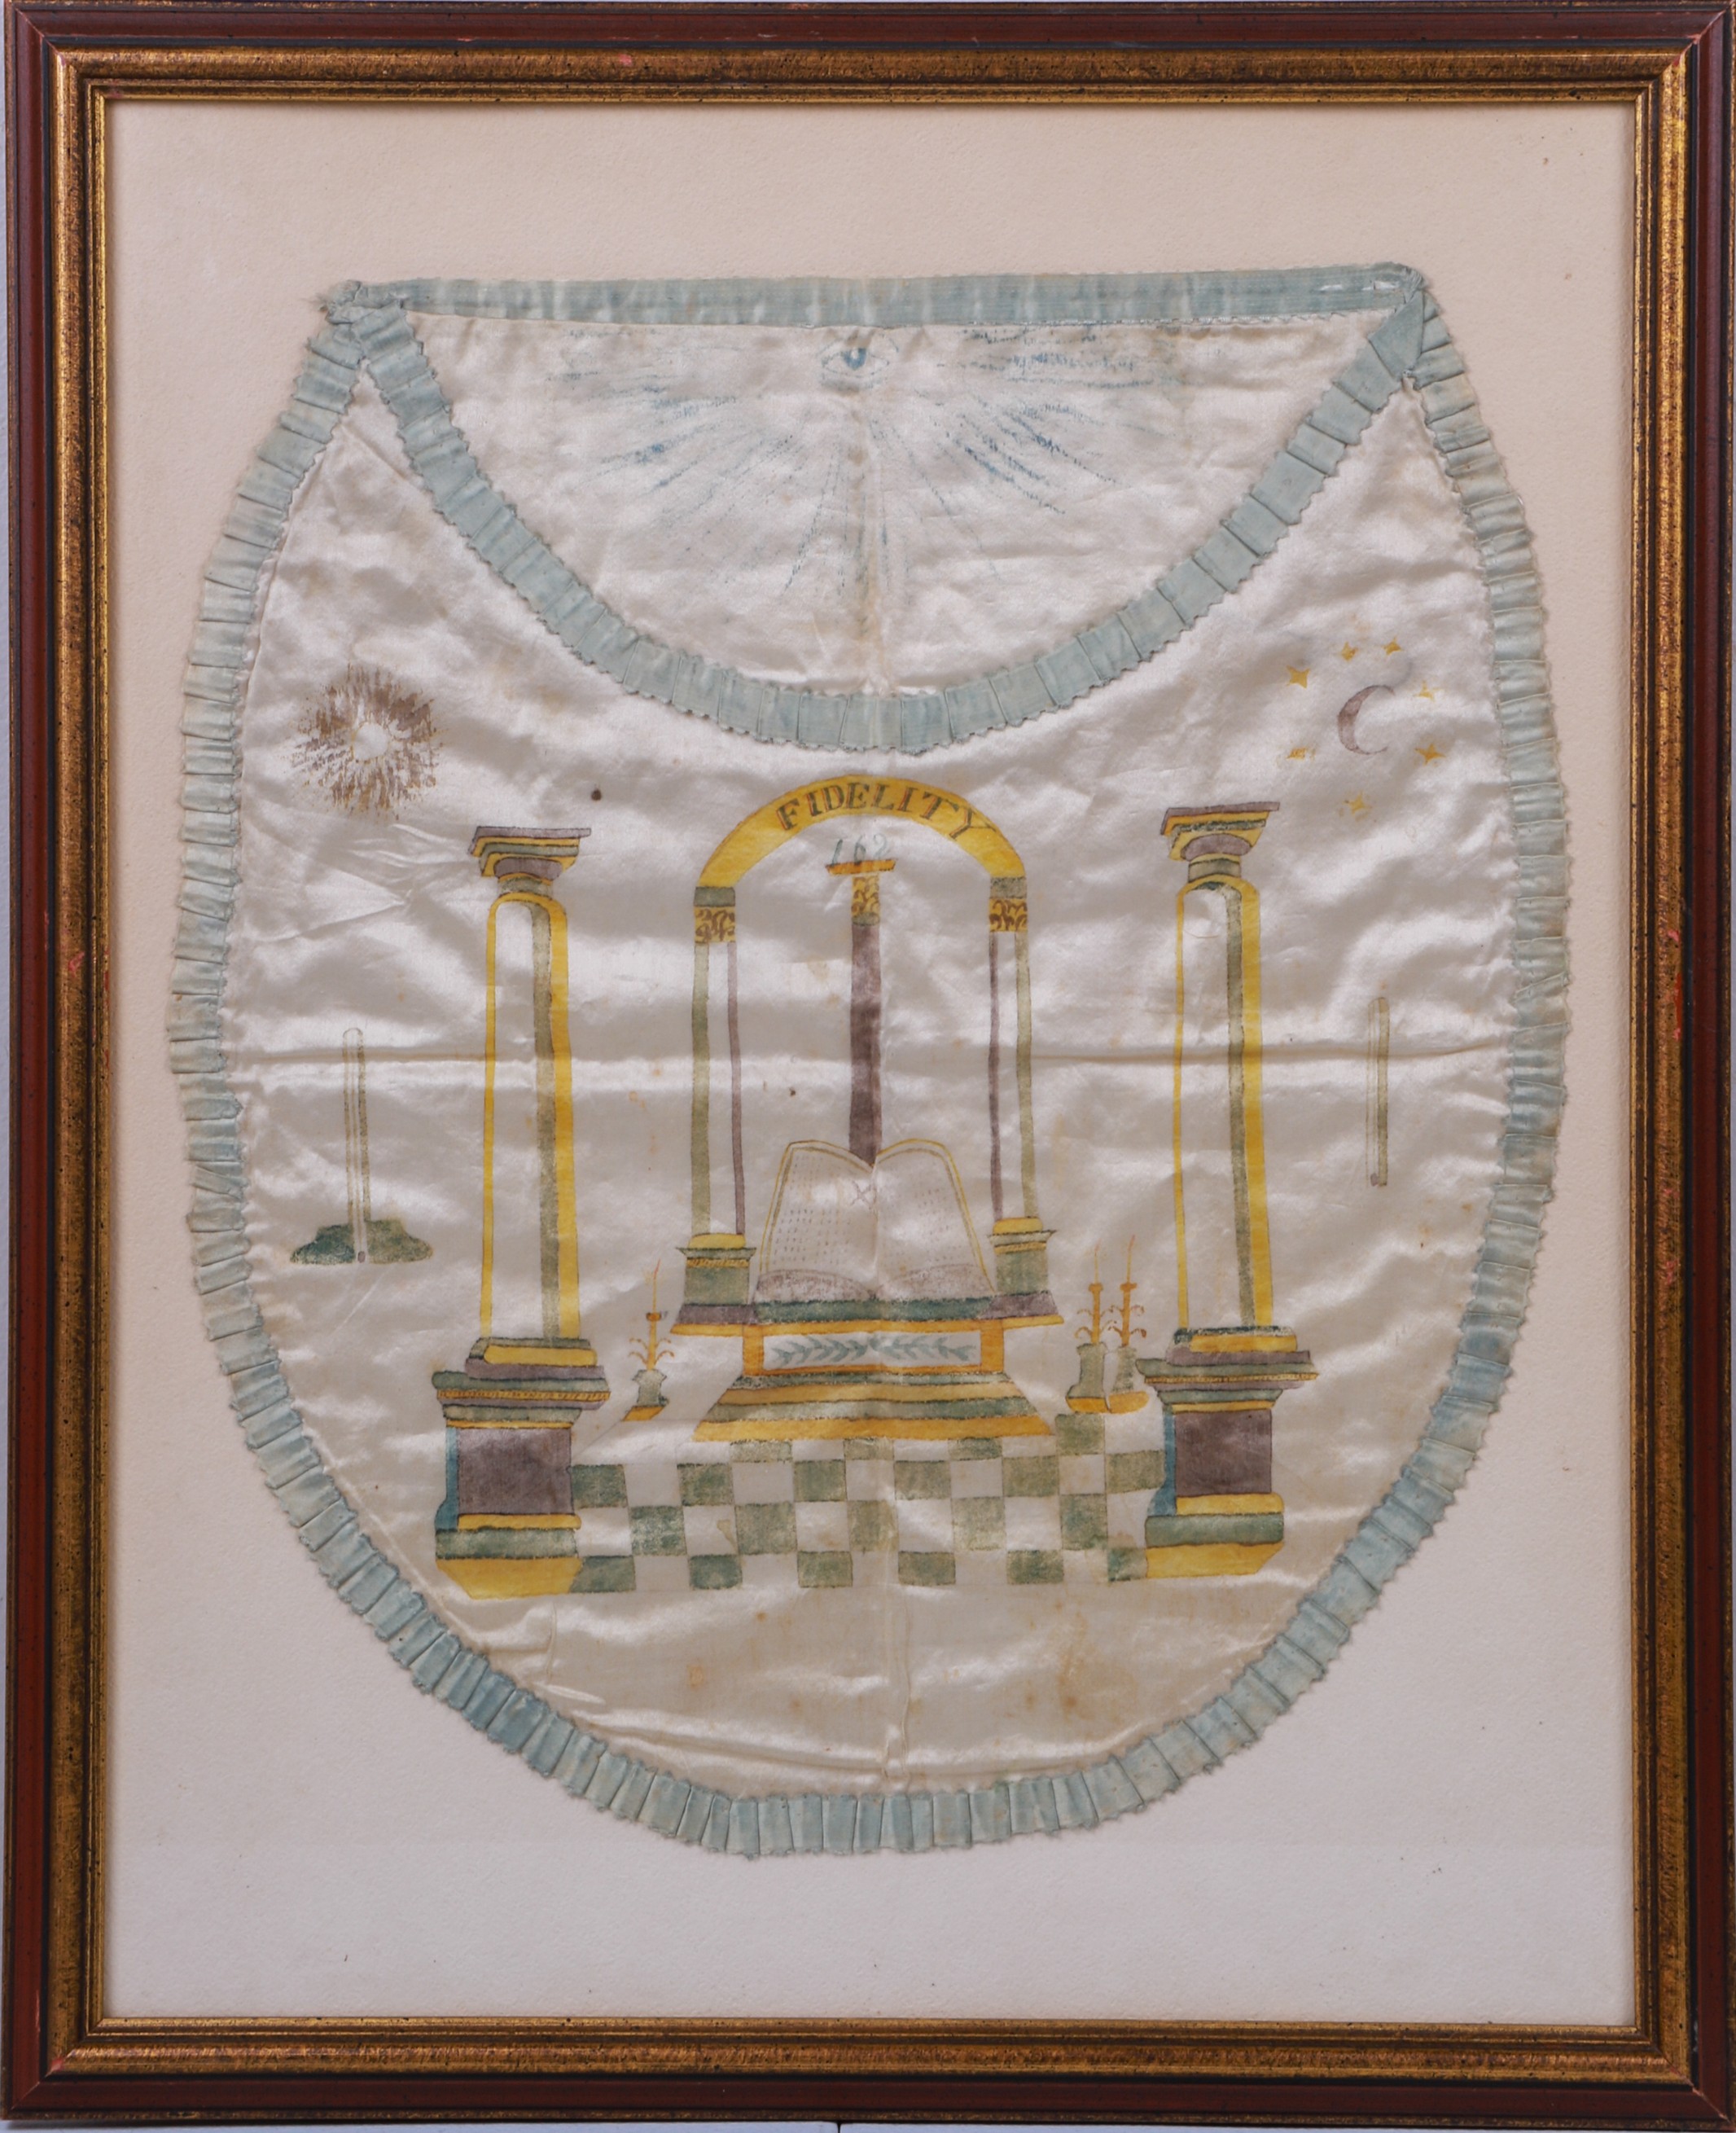 Framed Masonic apron, hand painted